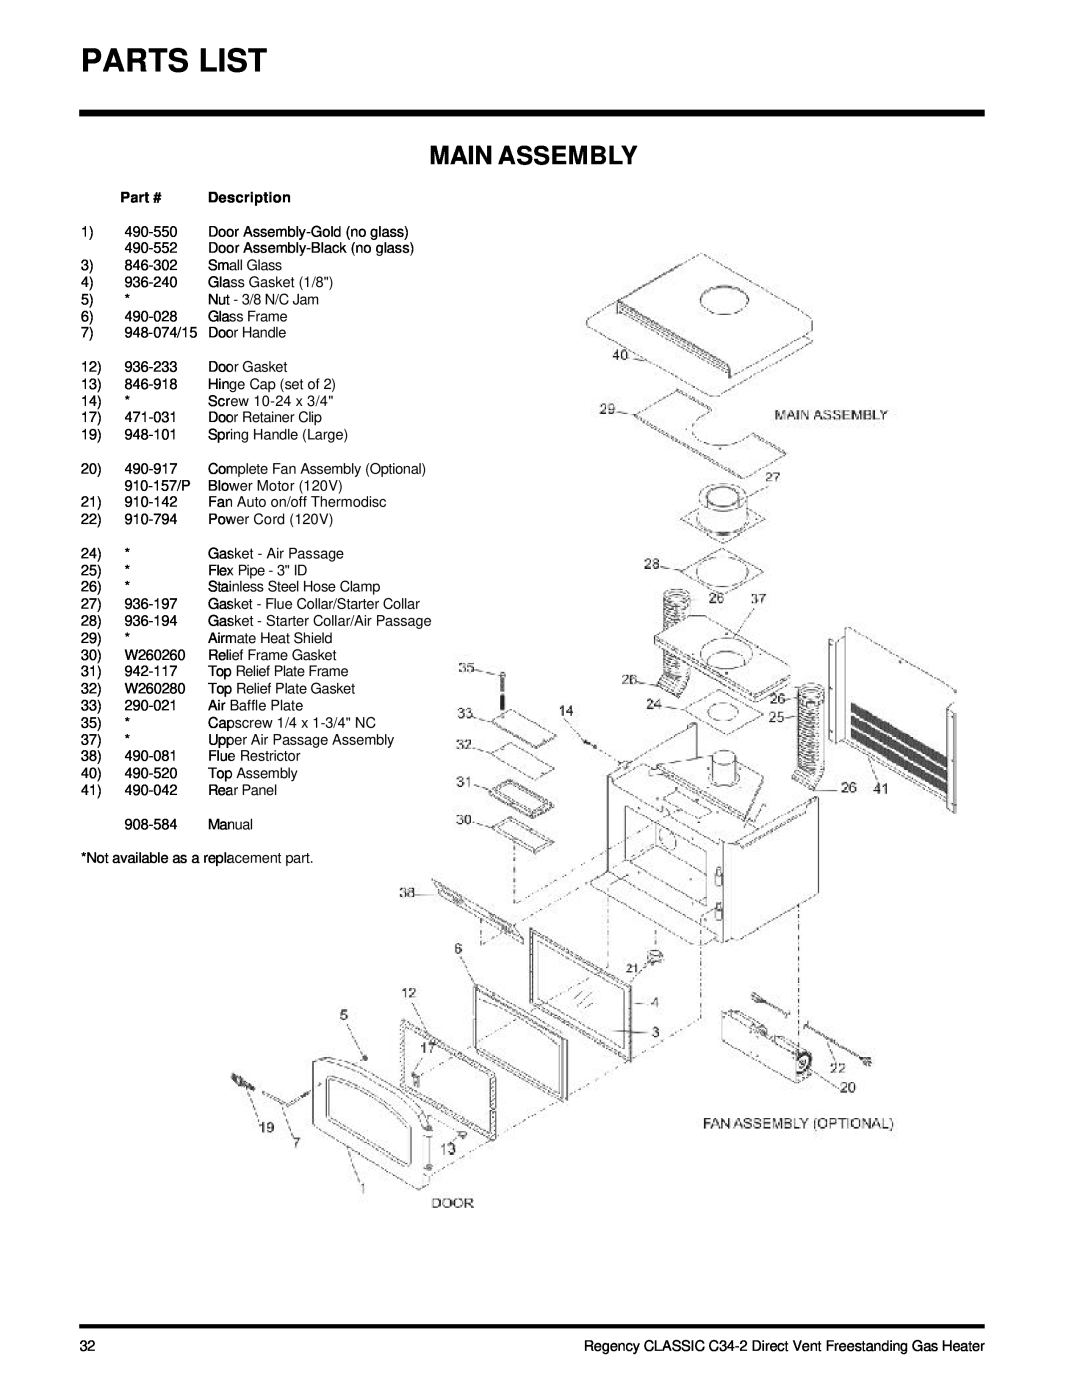 Regency C34-NG2, C34-LP2 installation manual Parts List, Main Assembly, Description 